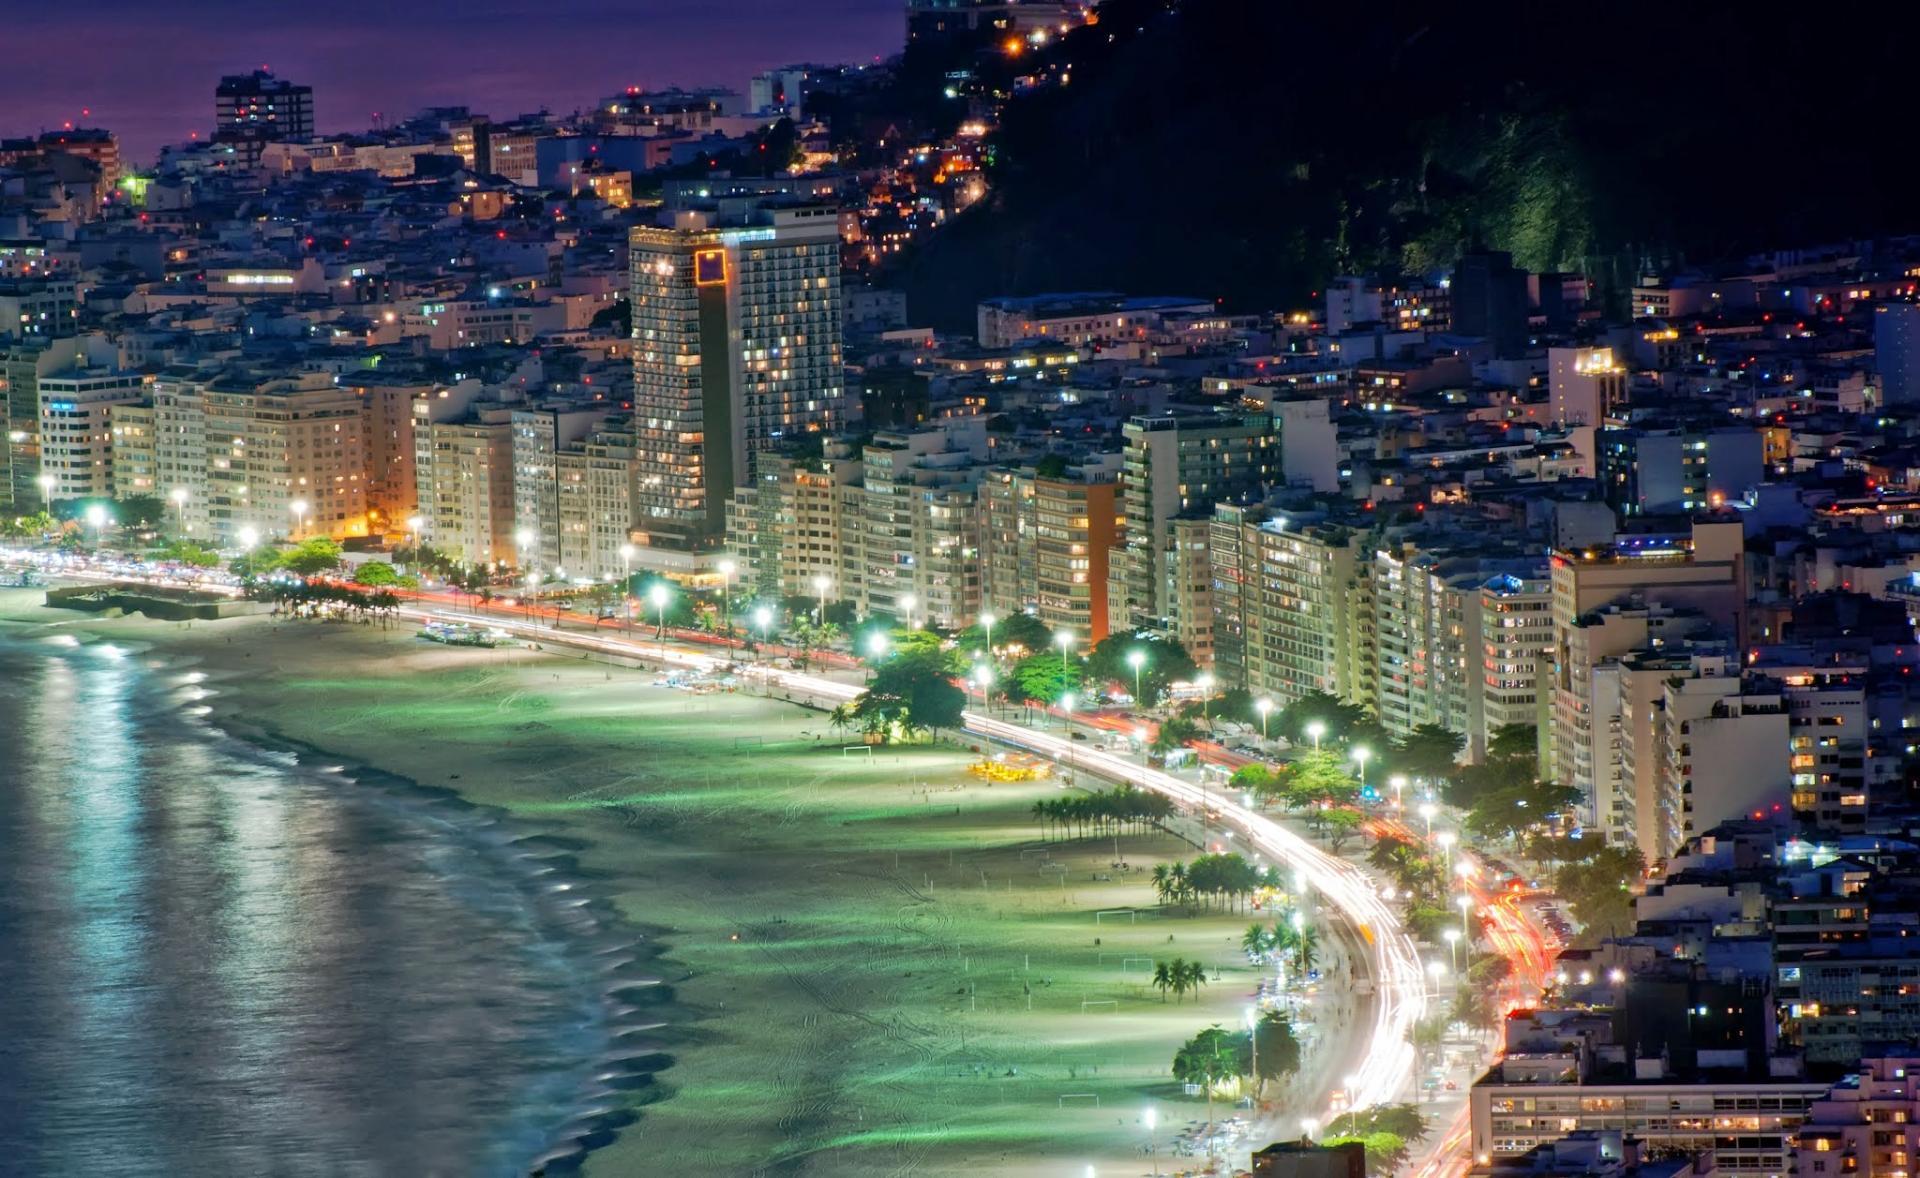 Rio's Copacabana beach at night and illuminated